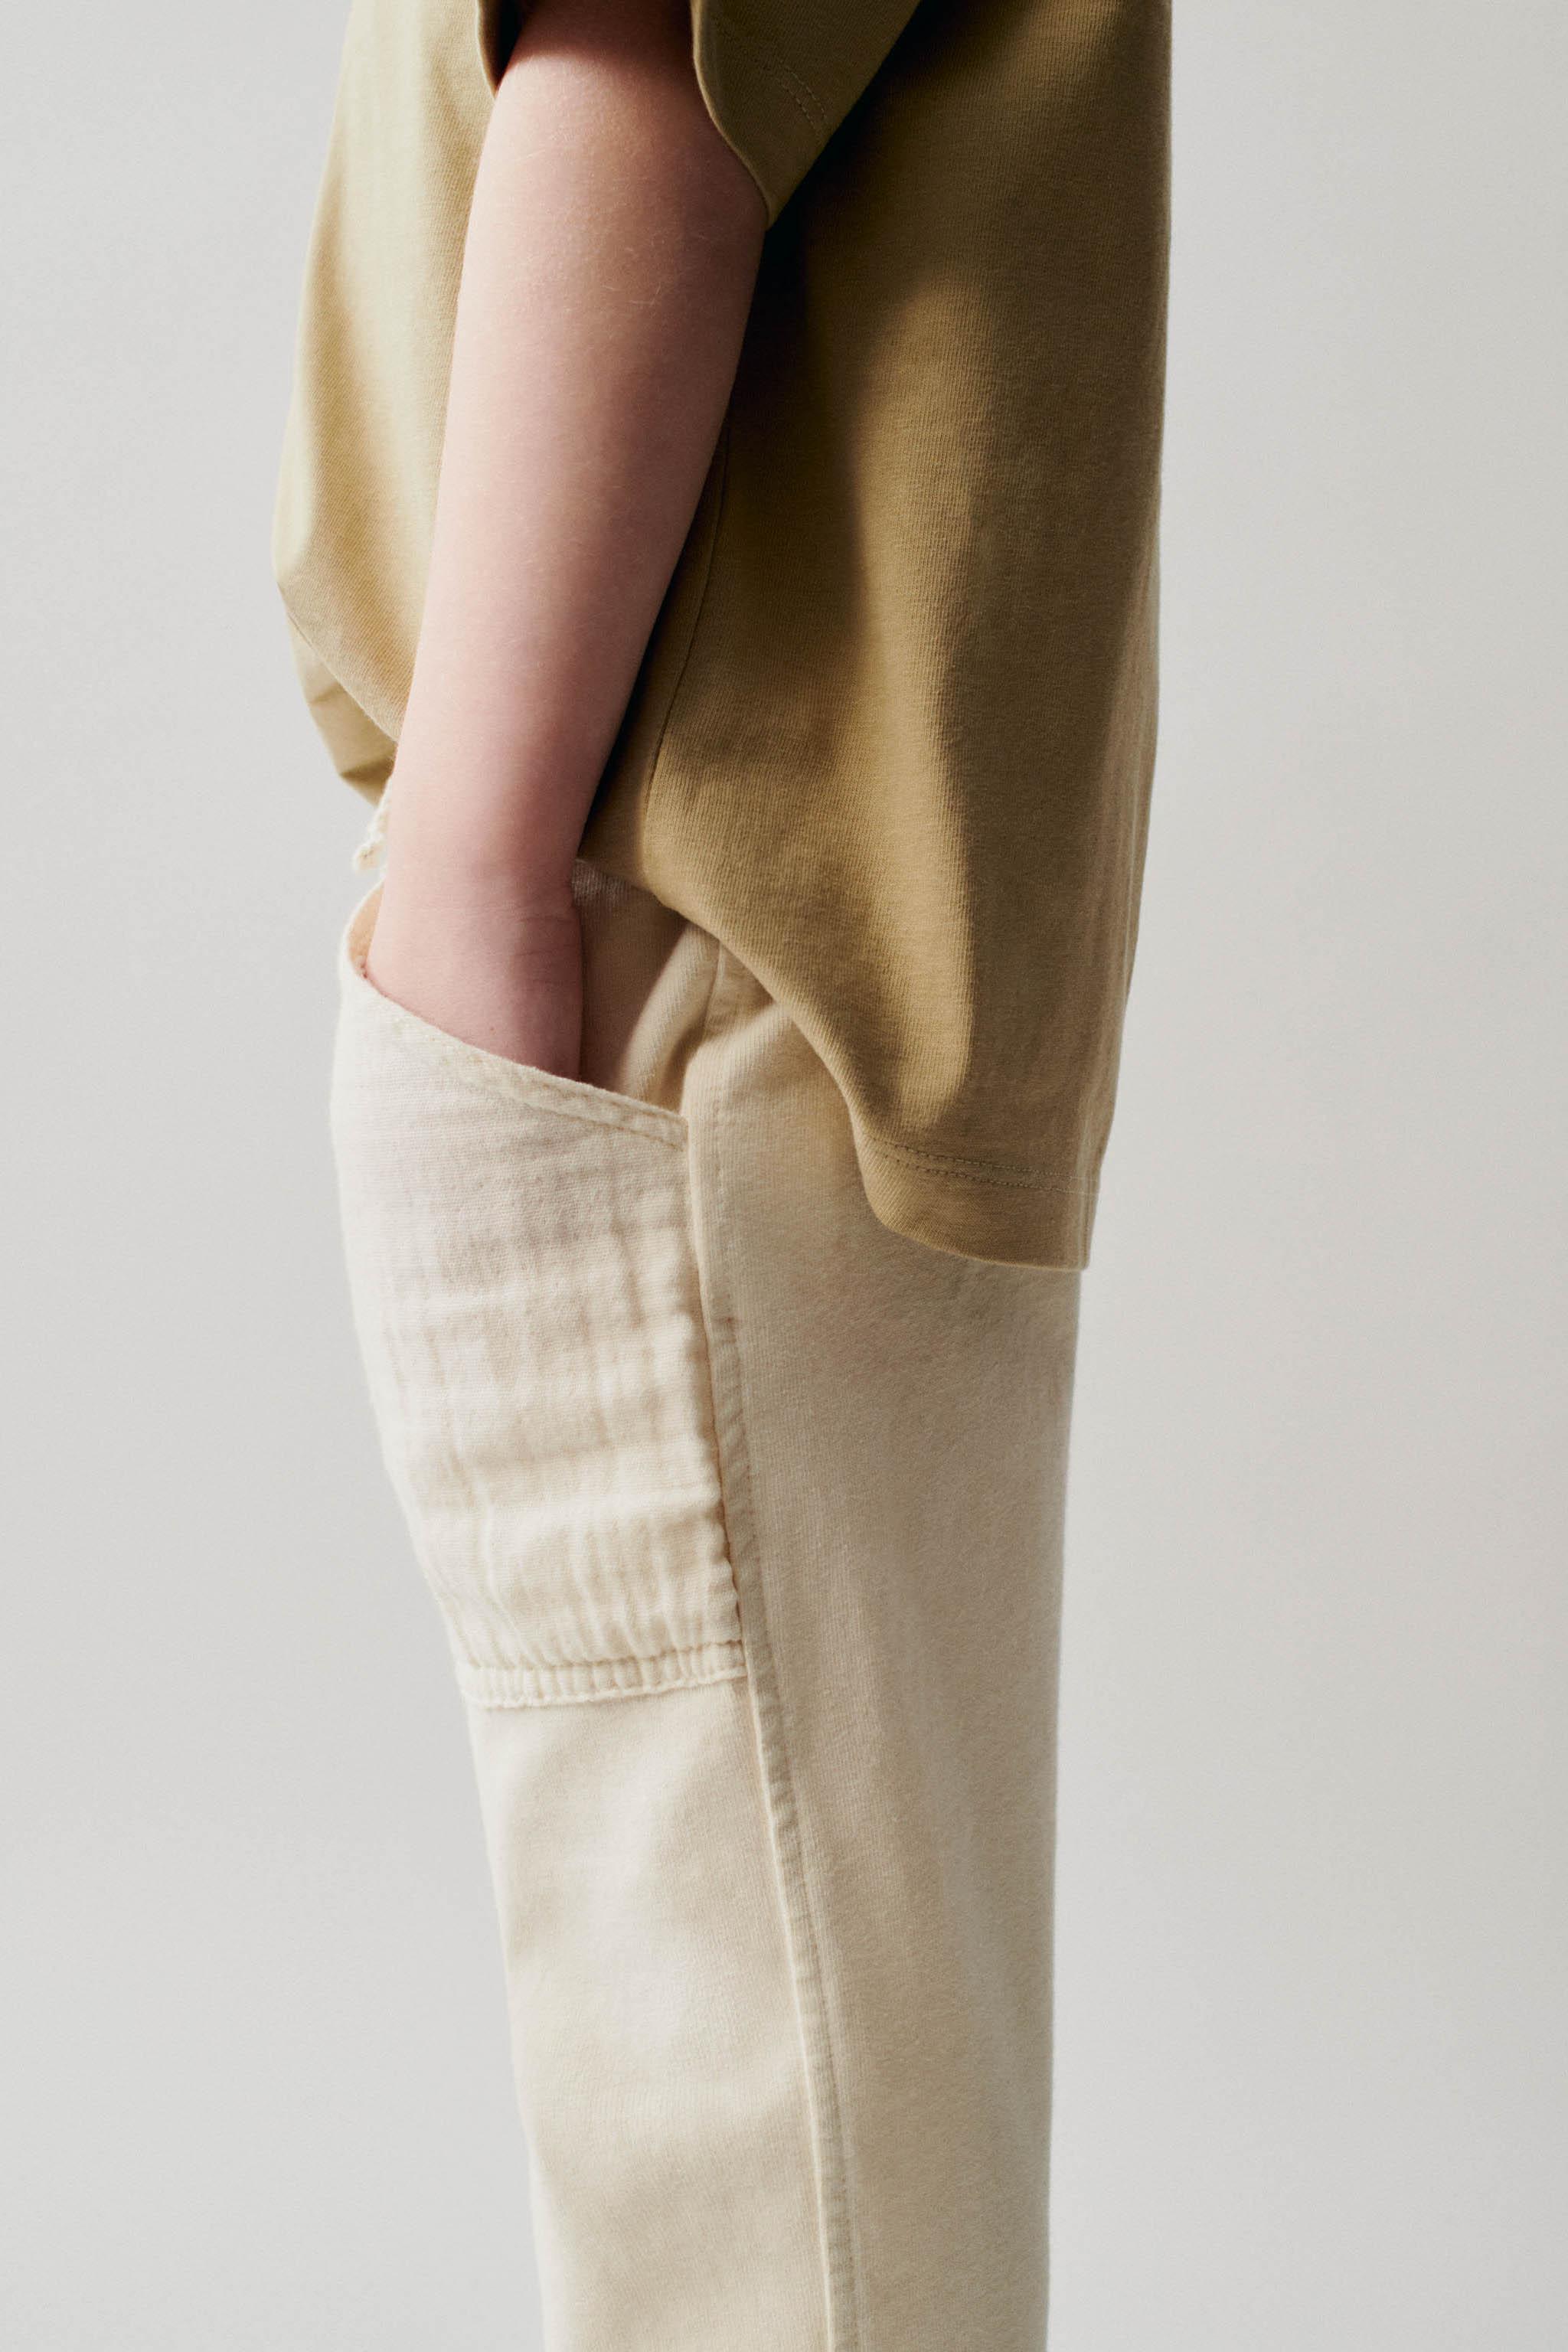 Zara Womens Beige Floral Trousers Size XS L28 in – Preworn Ltd